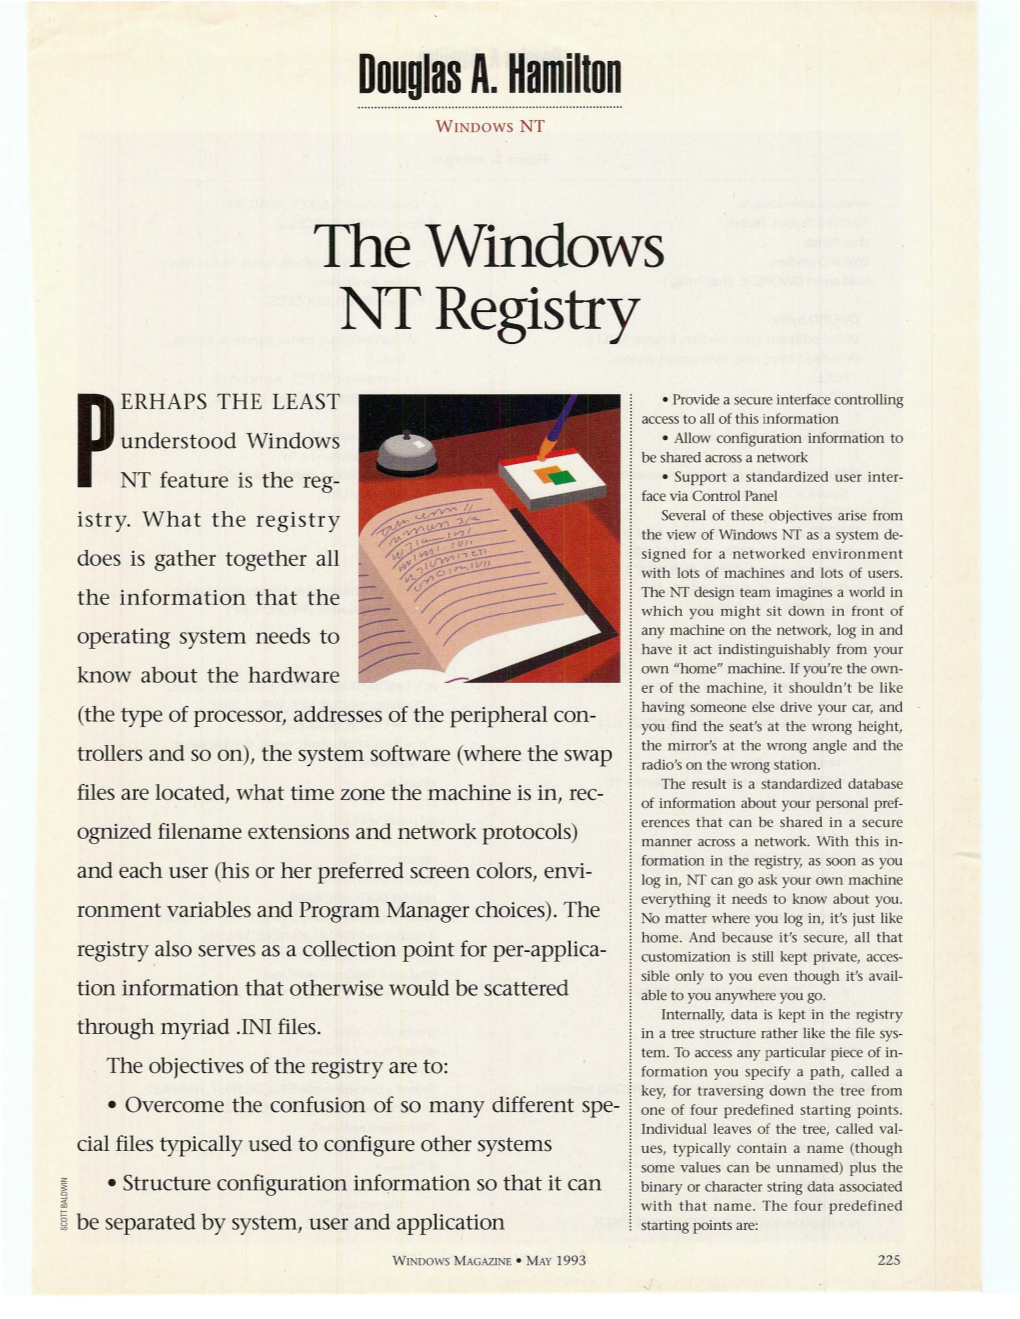 The Windows NT Registry